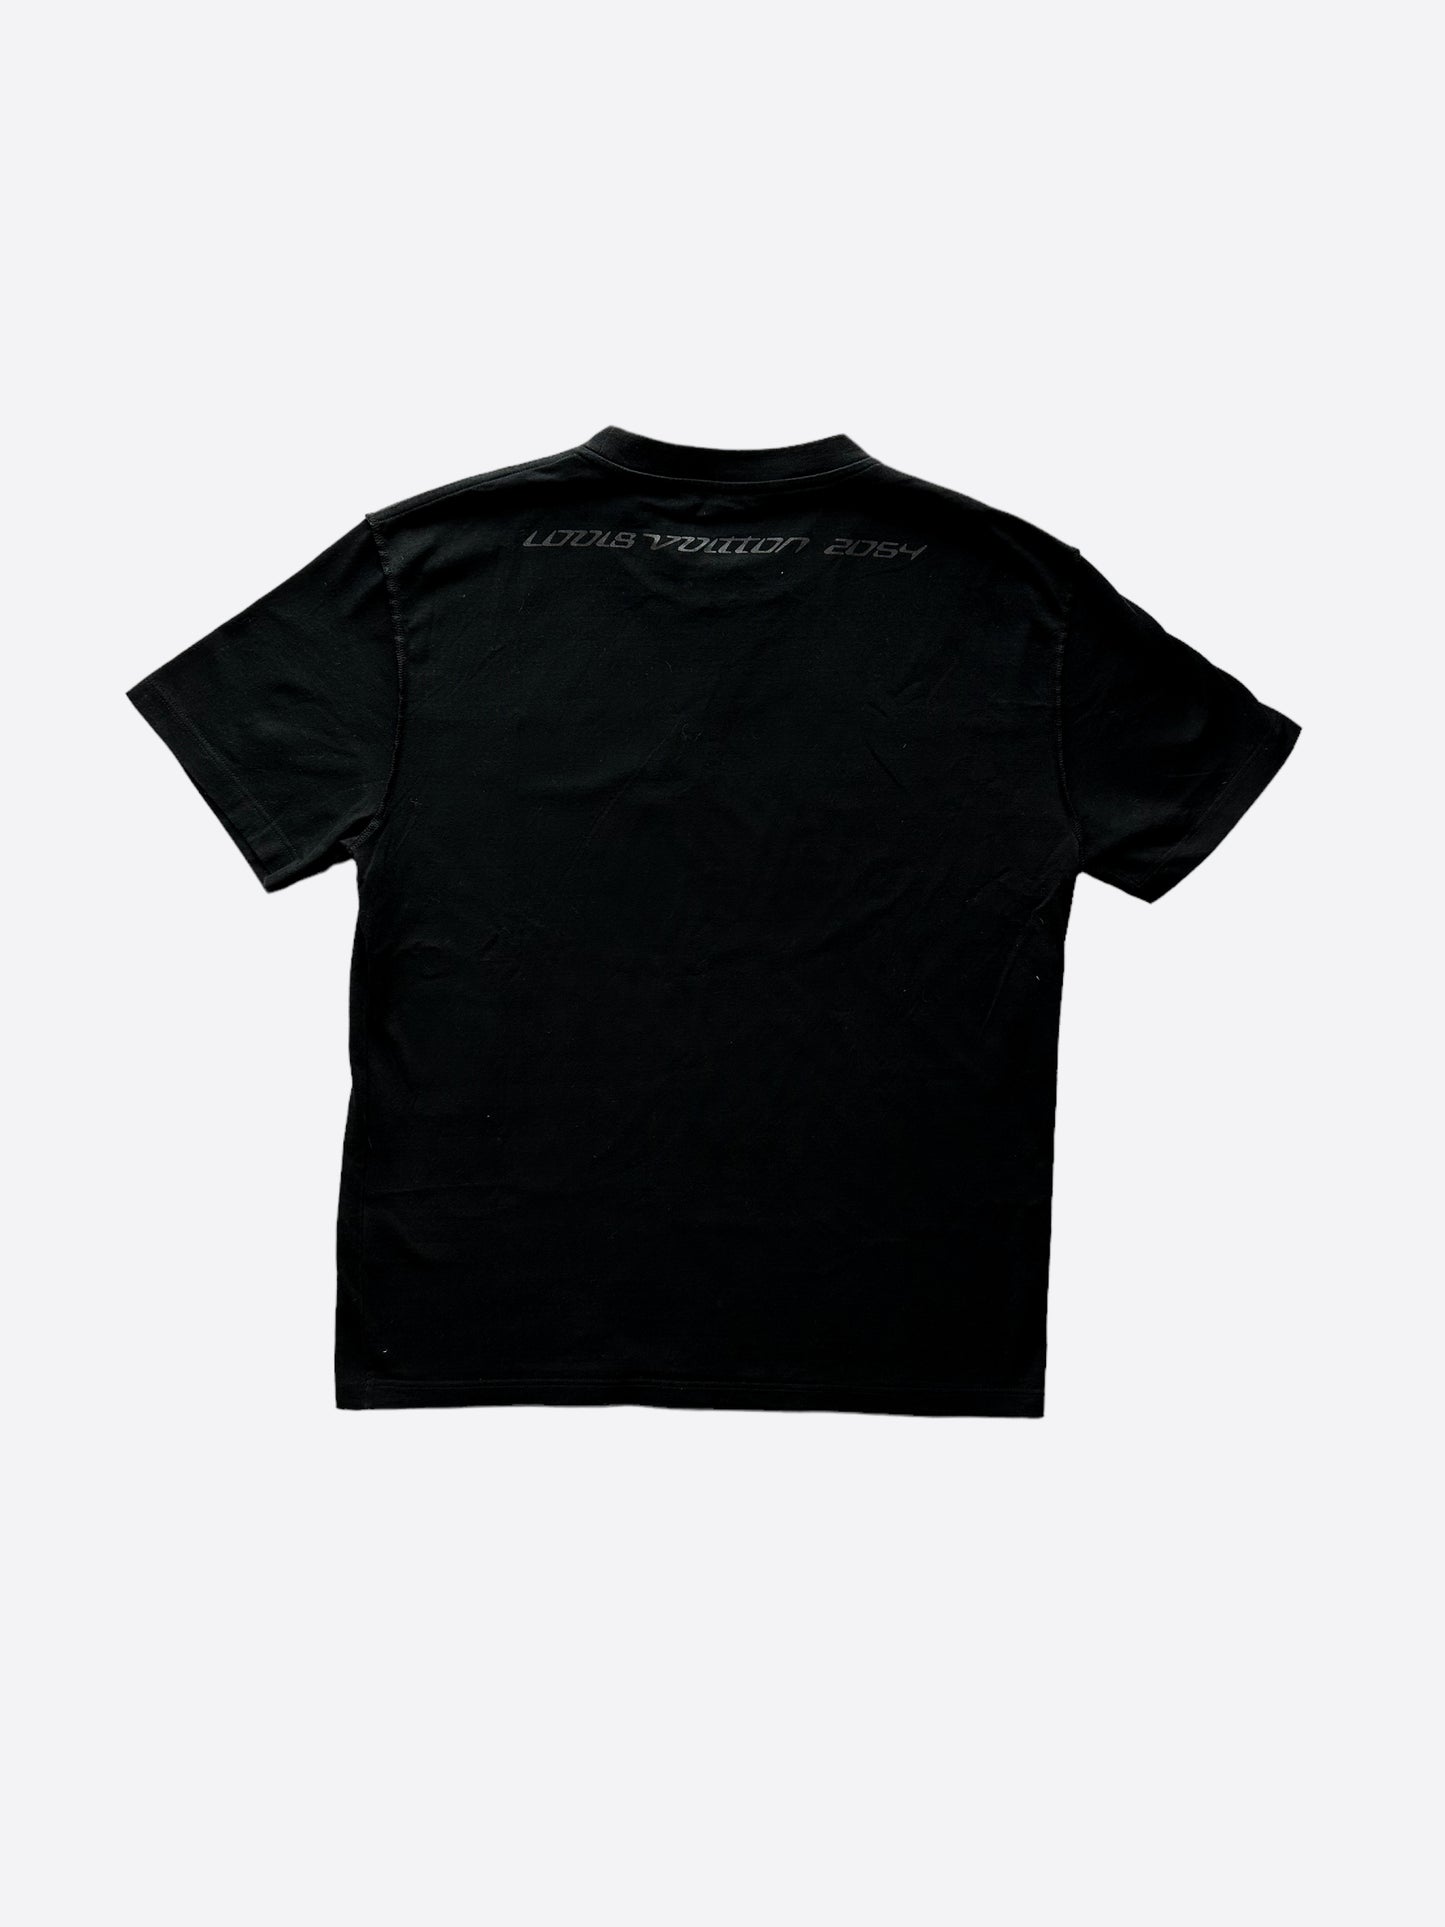 vuitton shirt black